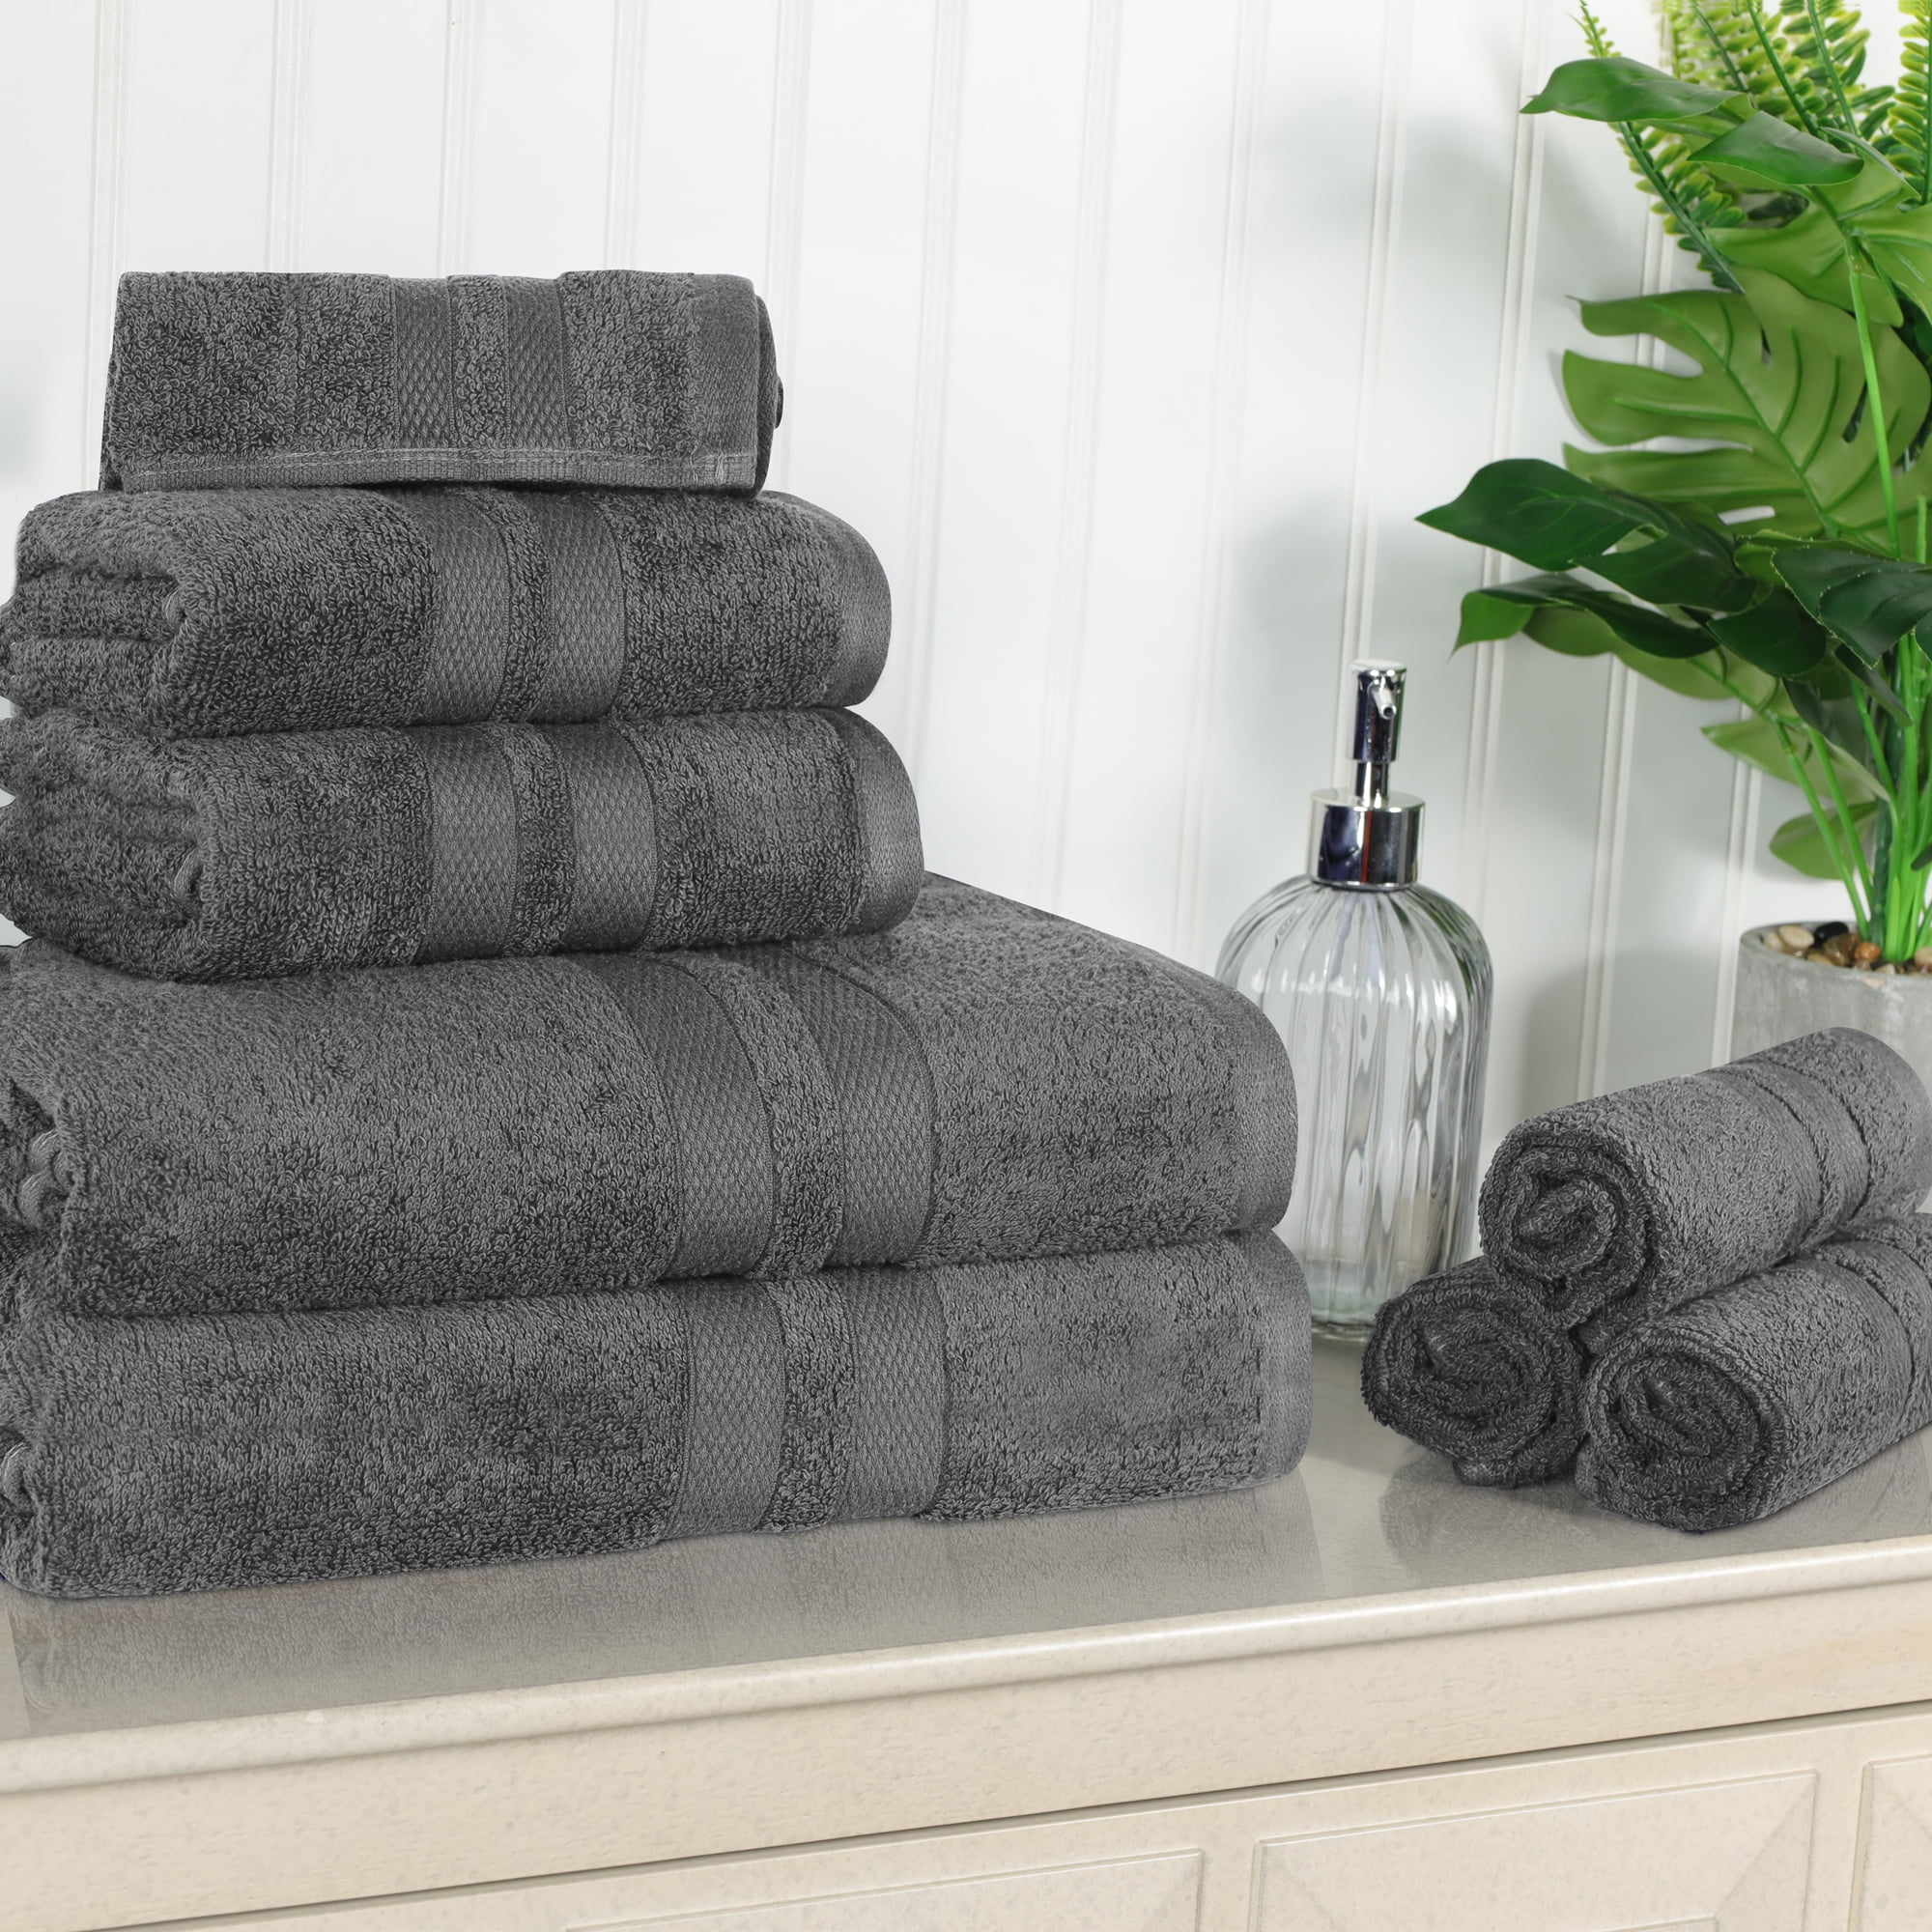 Ultra Soft Bamboo Multi Size Bathroom Towel Set - Blue by Misona